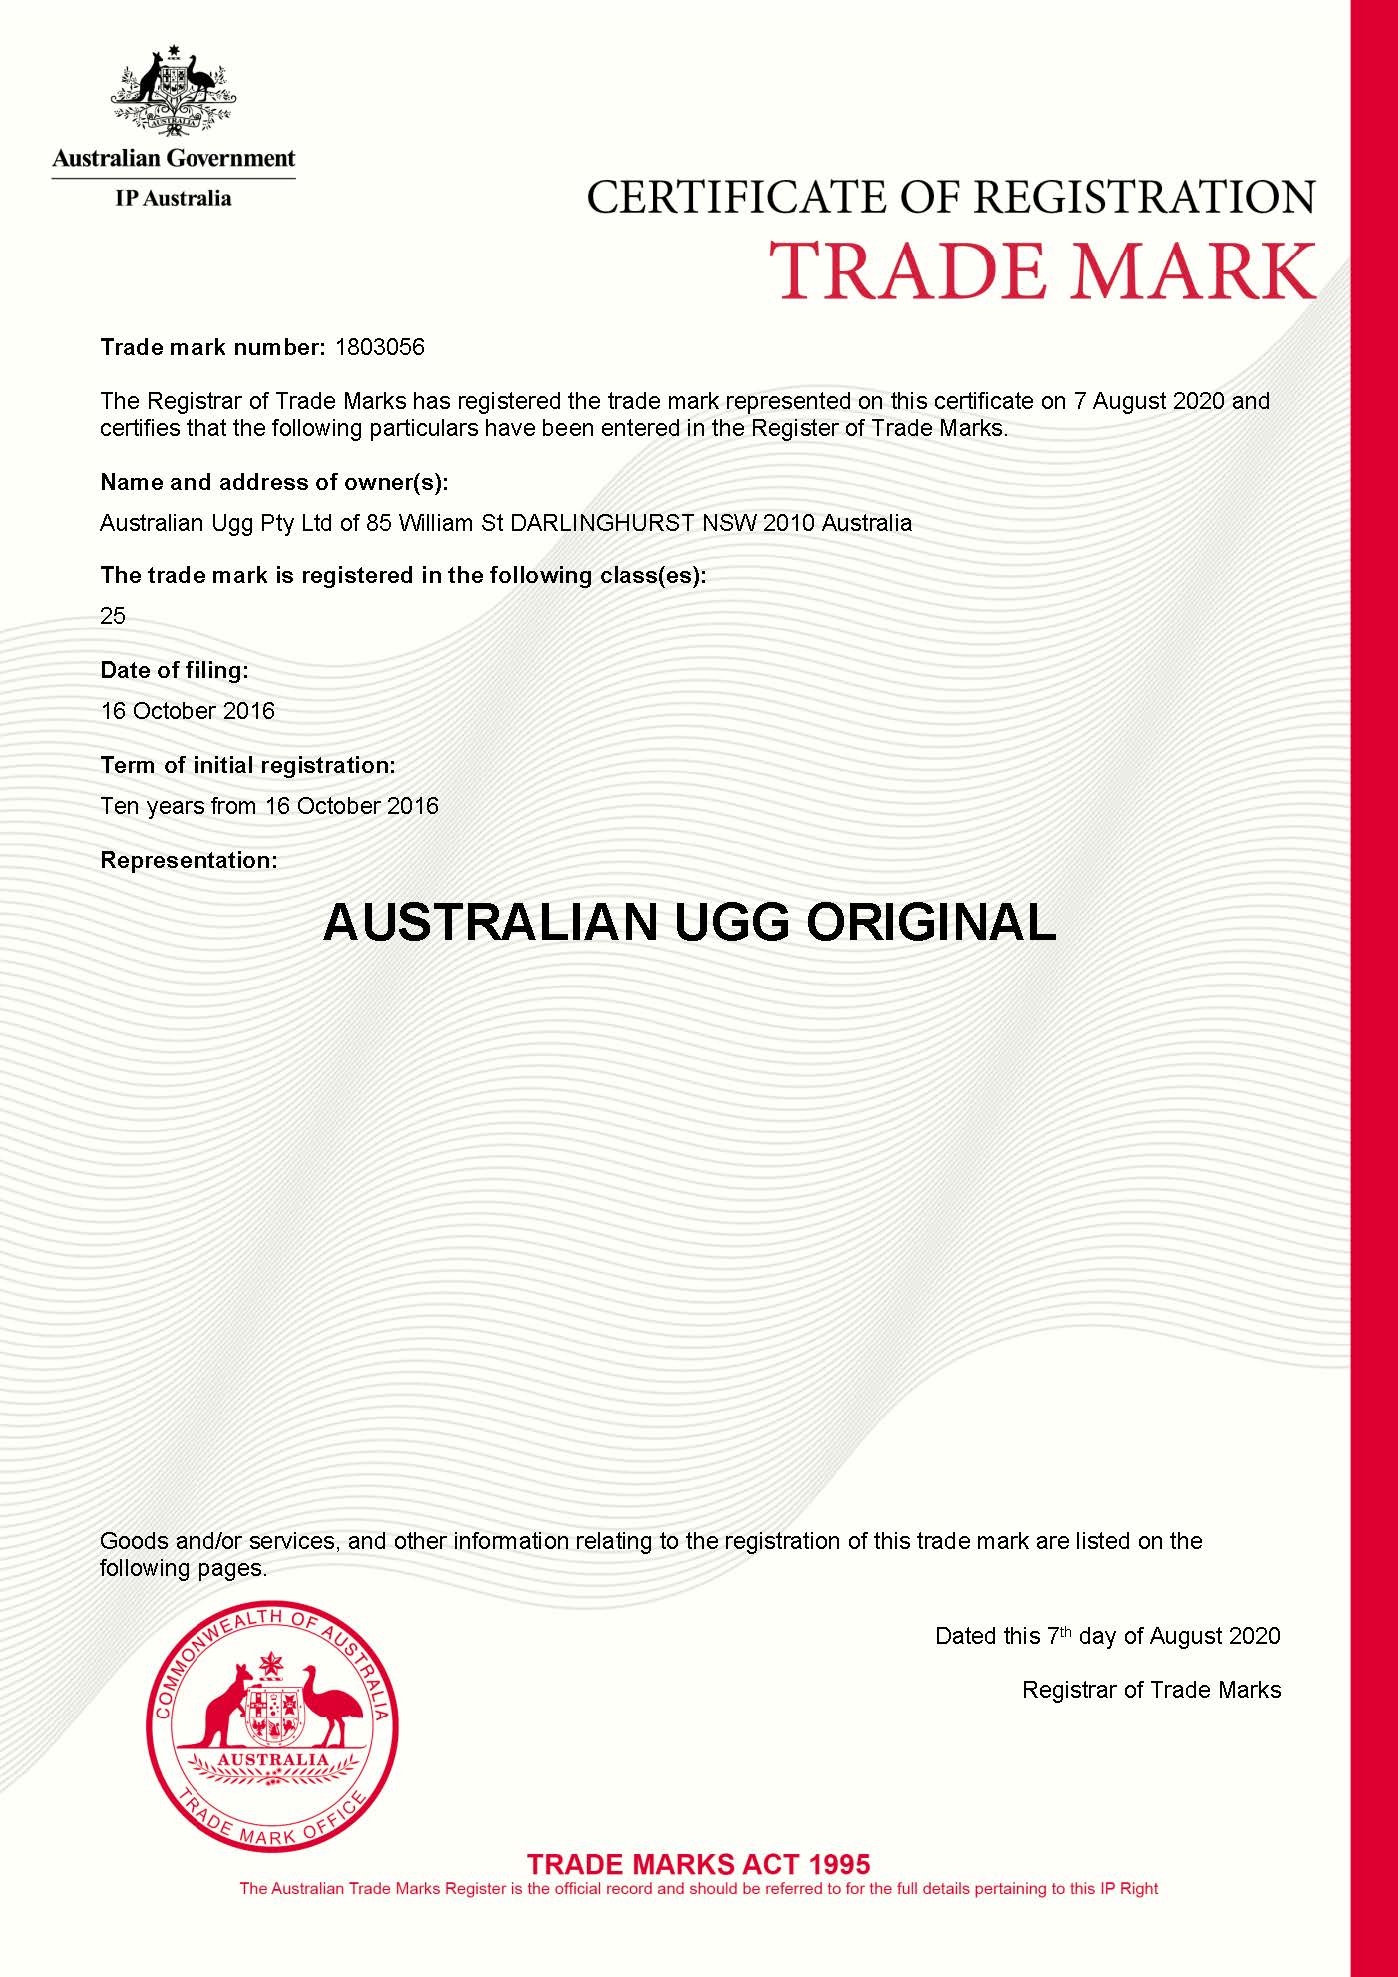 AUSTRALIAN UGG ORIGINAL Trade Mark Certificate 1803056